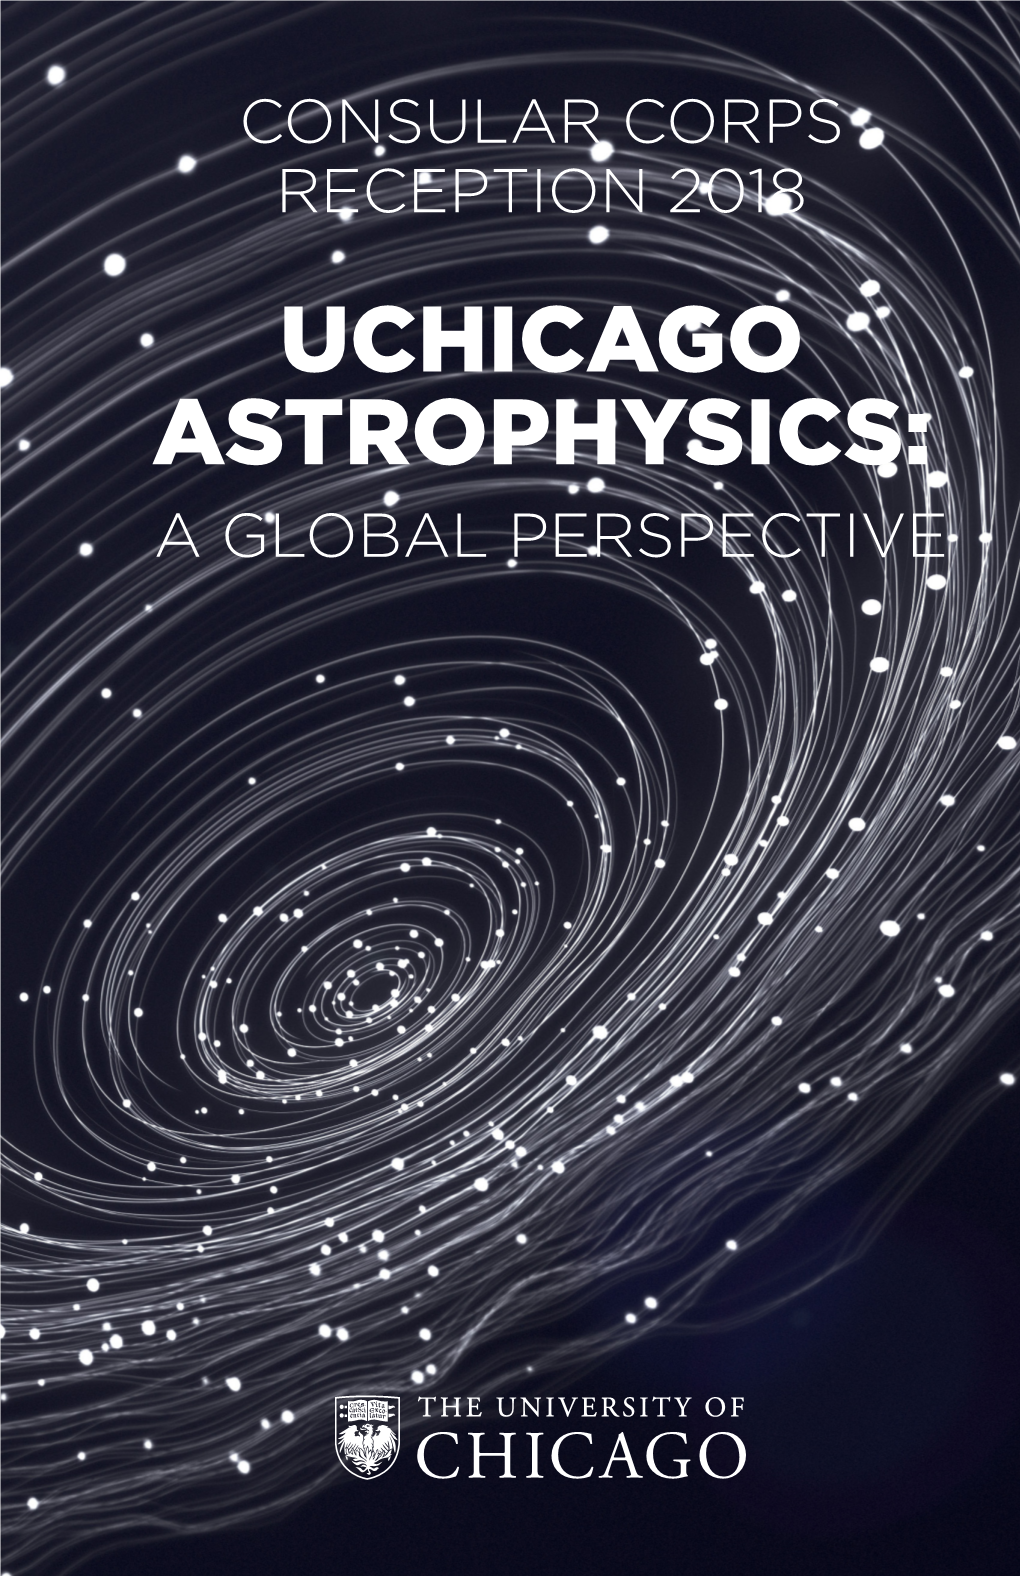 UCHICAGO ASTROPHYSICS: a GLOBAL PERSPECTIVE PROGRAM Tuesday, November 13, 2018